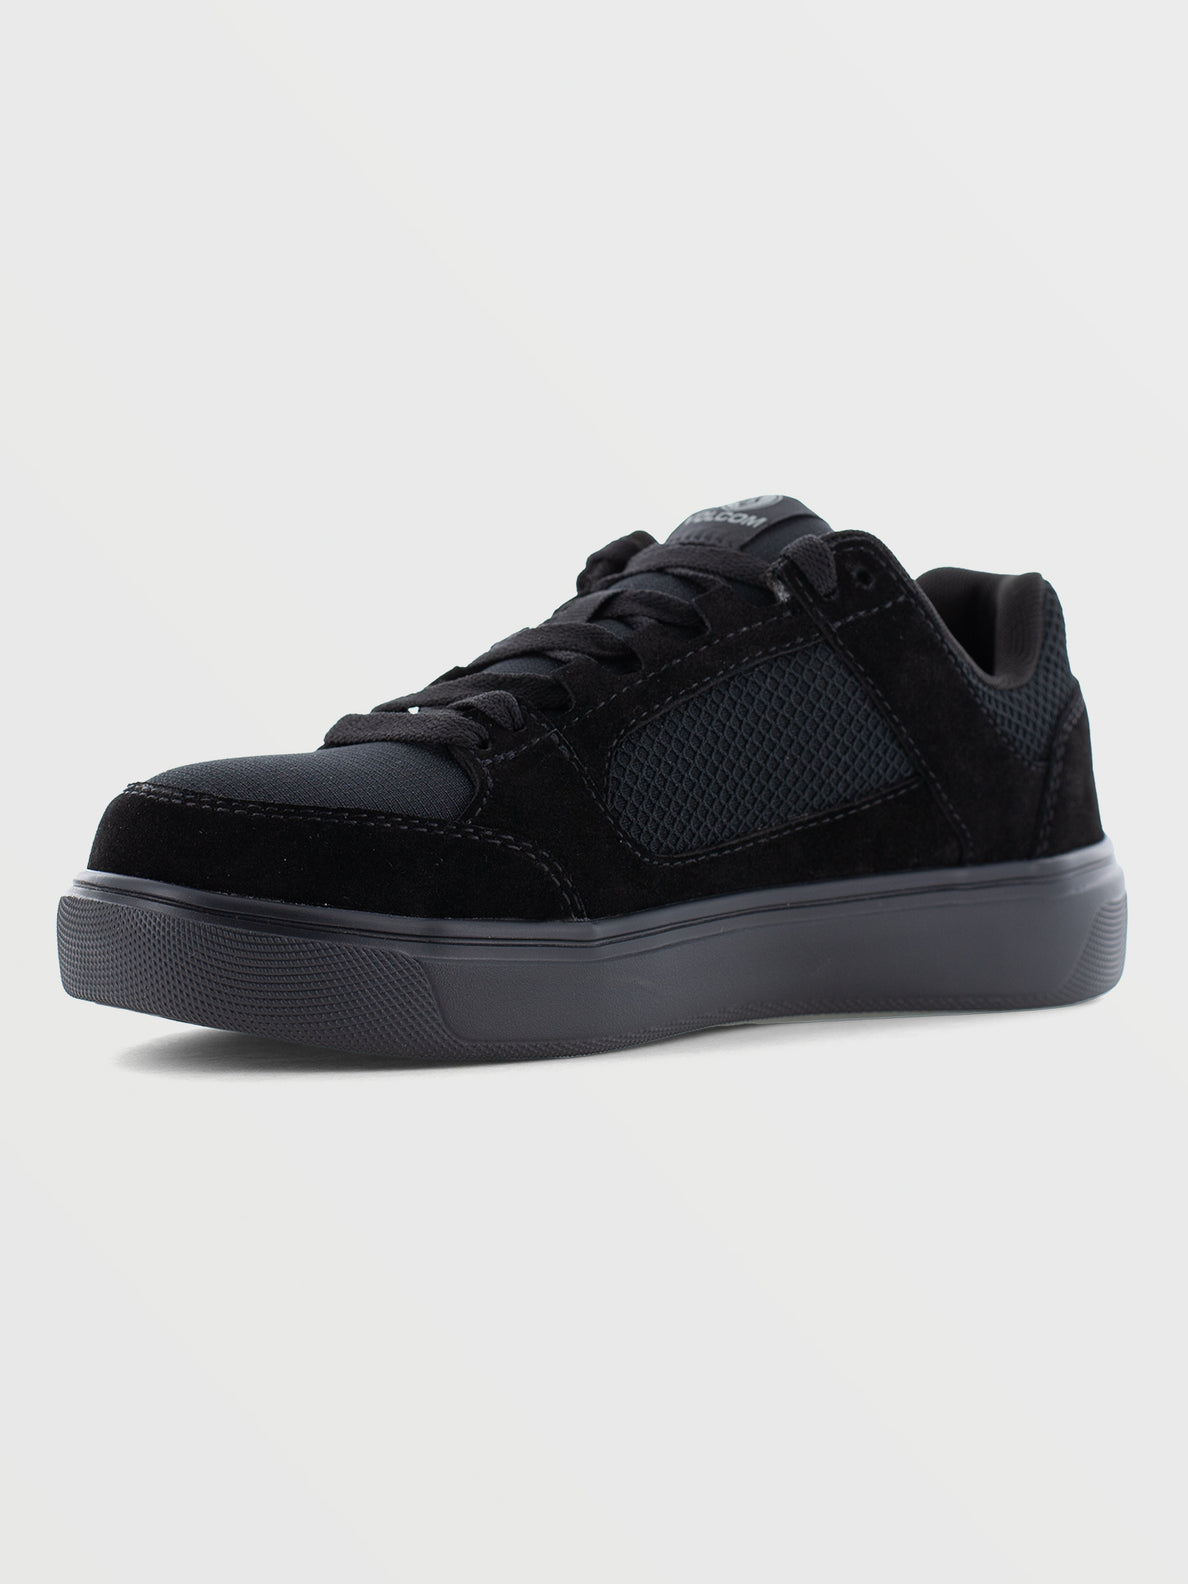 Volcom Workwear Evolve Shoes - Black